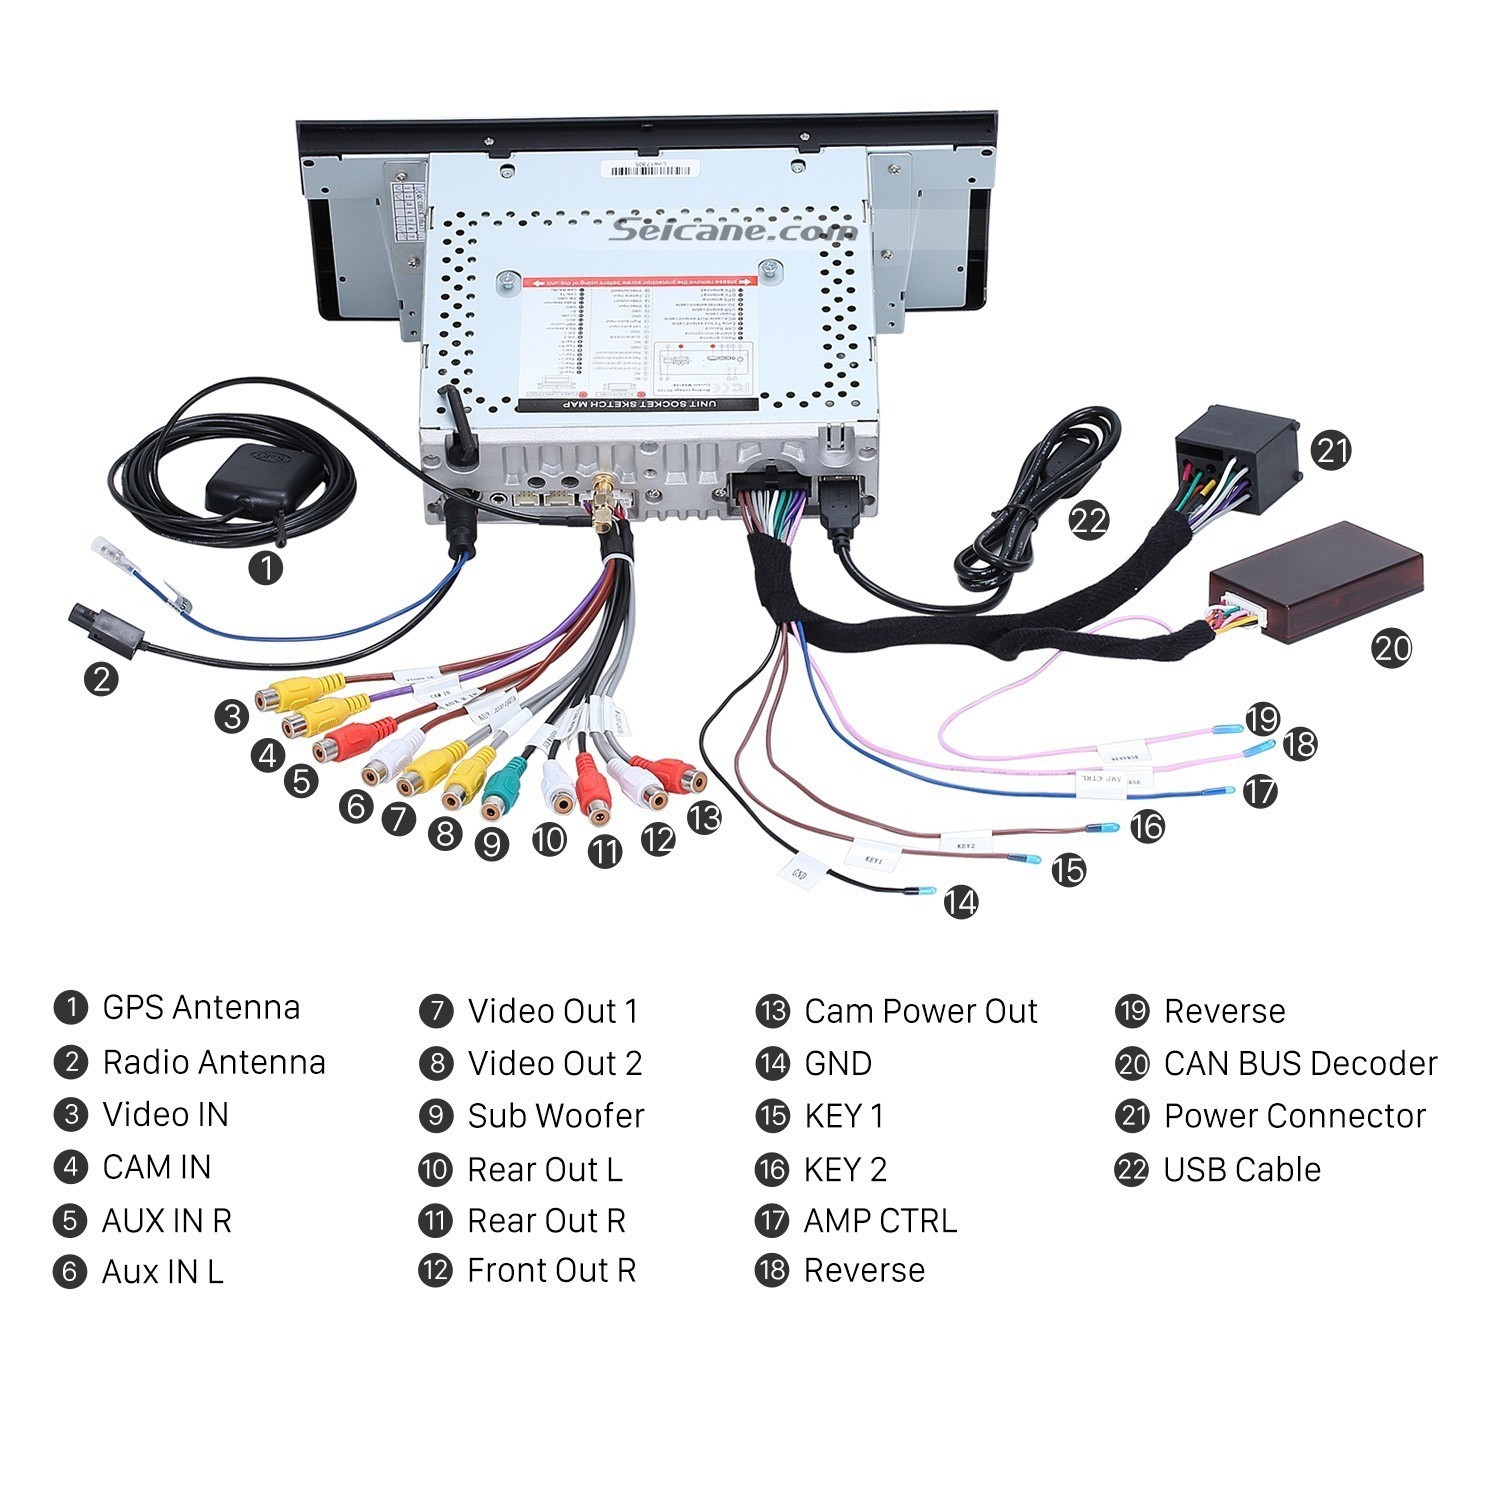 Vehicle Parts Diagram Wiring Diagram Car Stereo Amplifier Best Diagram A Car Best Car Of Vehicle Parts Diagram